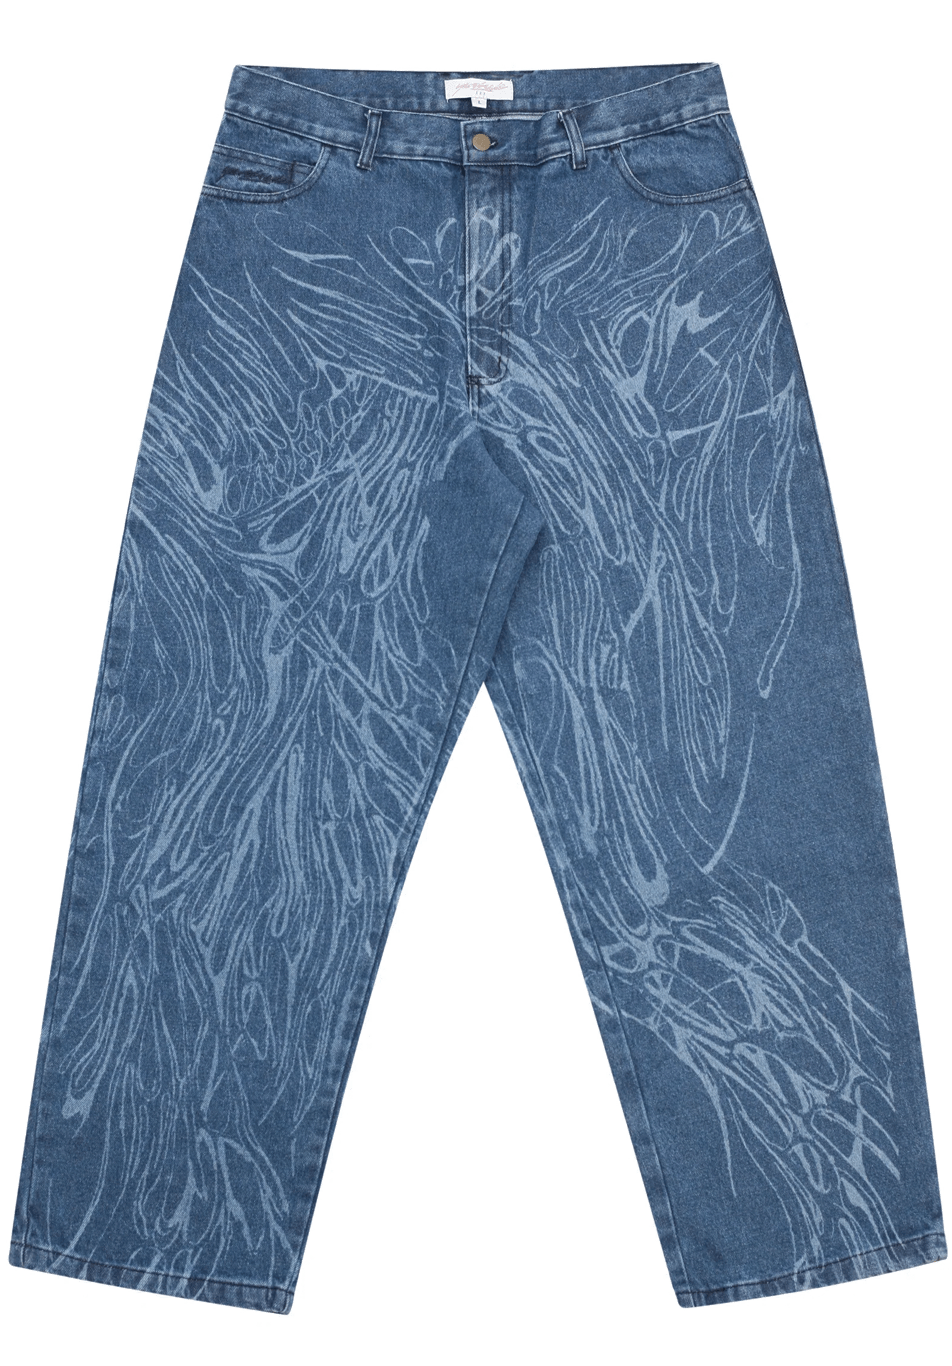 yardsale Phantasy jeans ライトブルー - デニム/ジーンズ